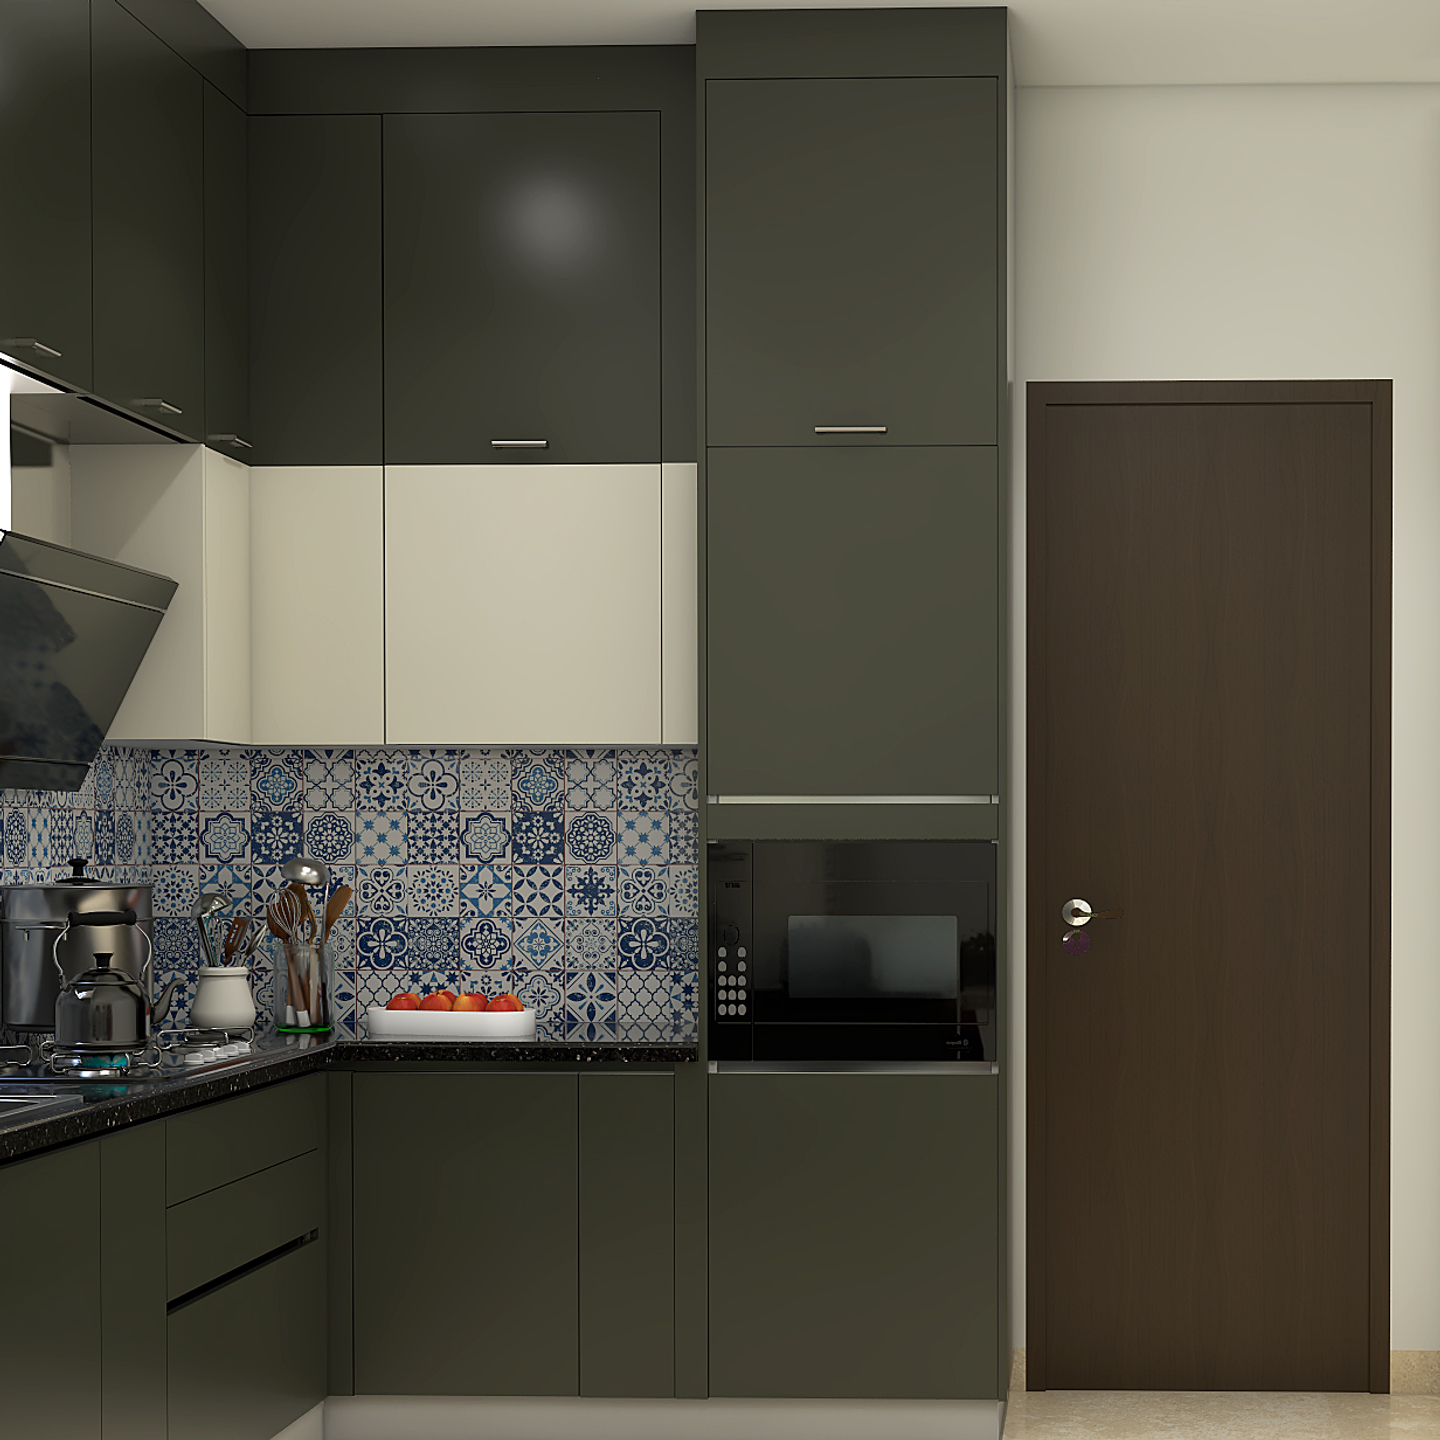 U-Shaped Kitchen Design With Spacious Storage - Livspace